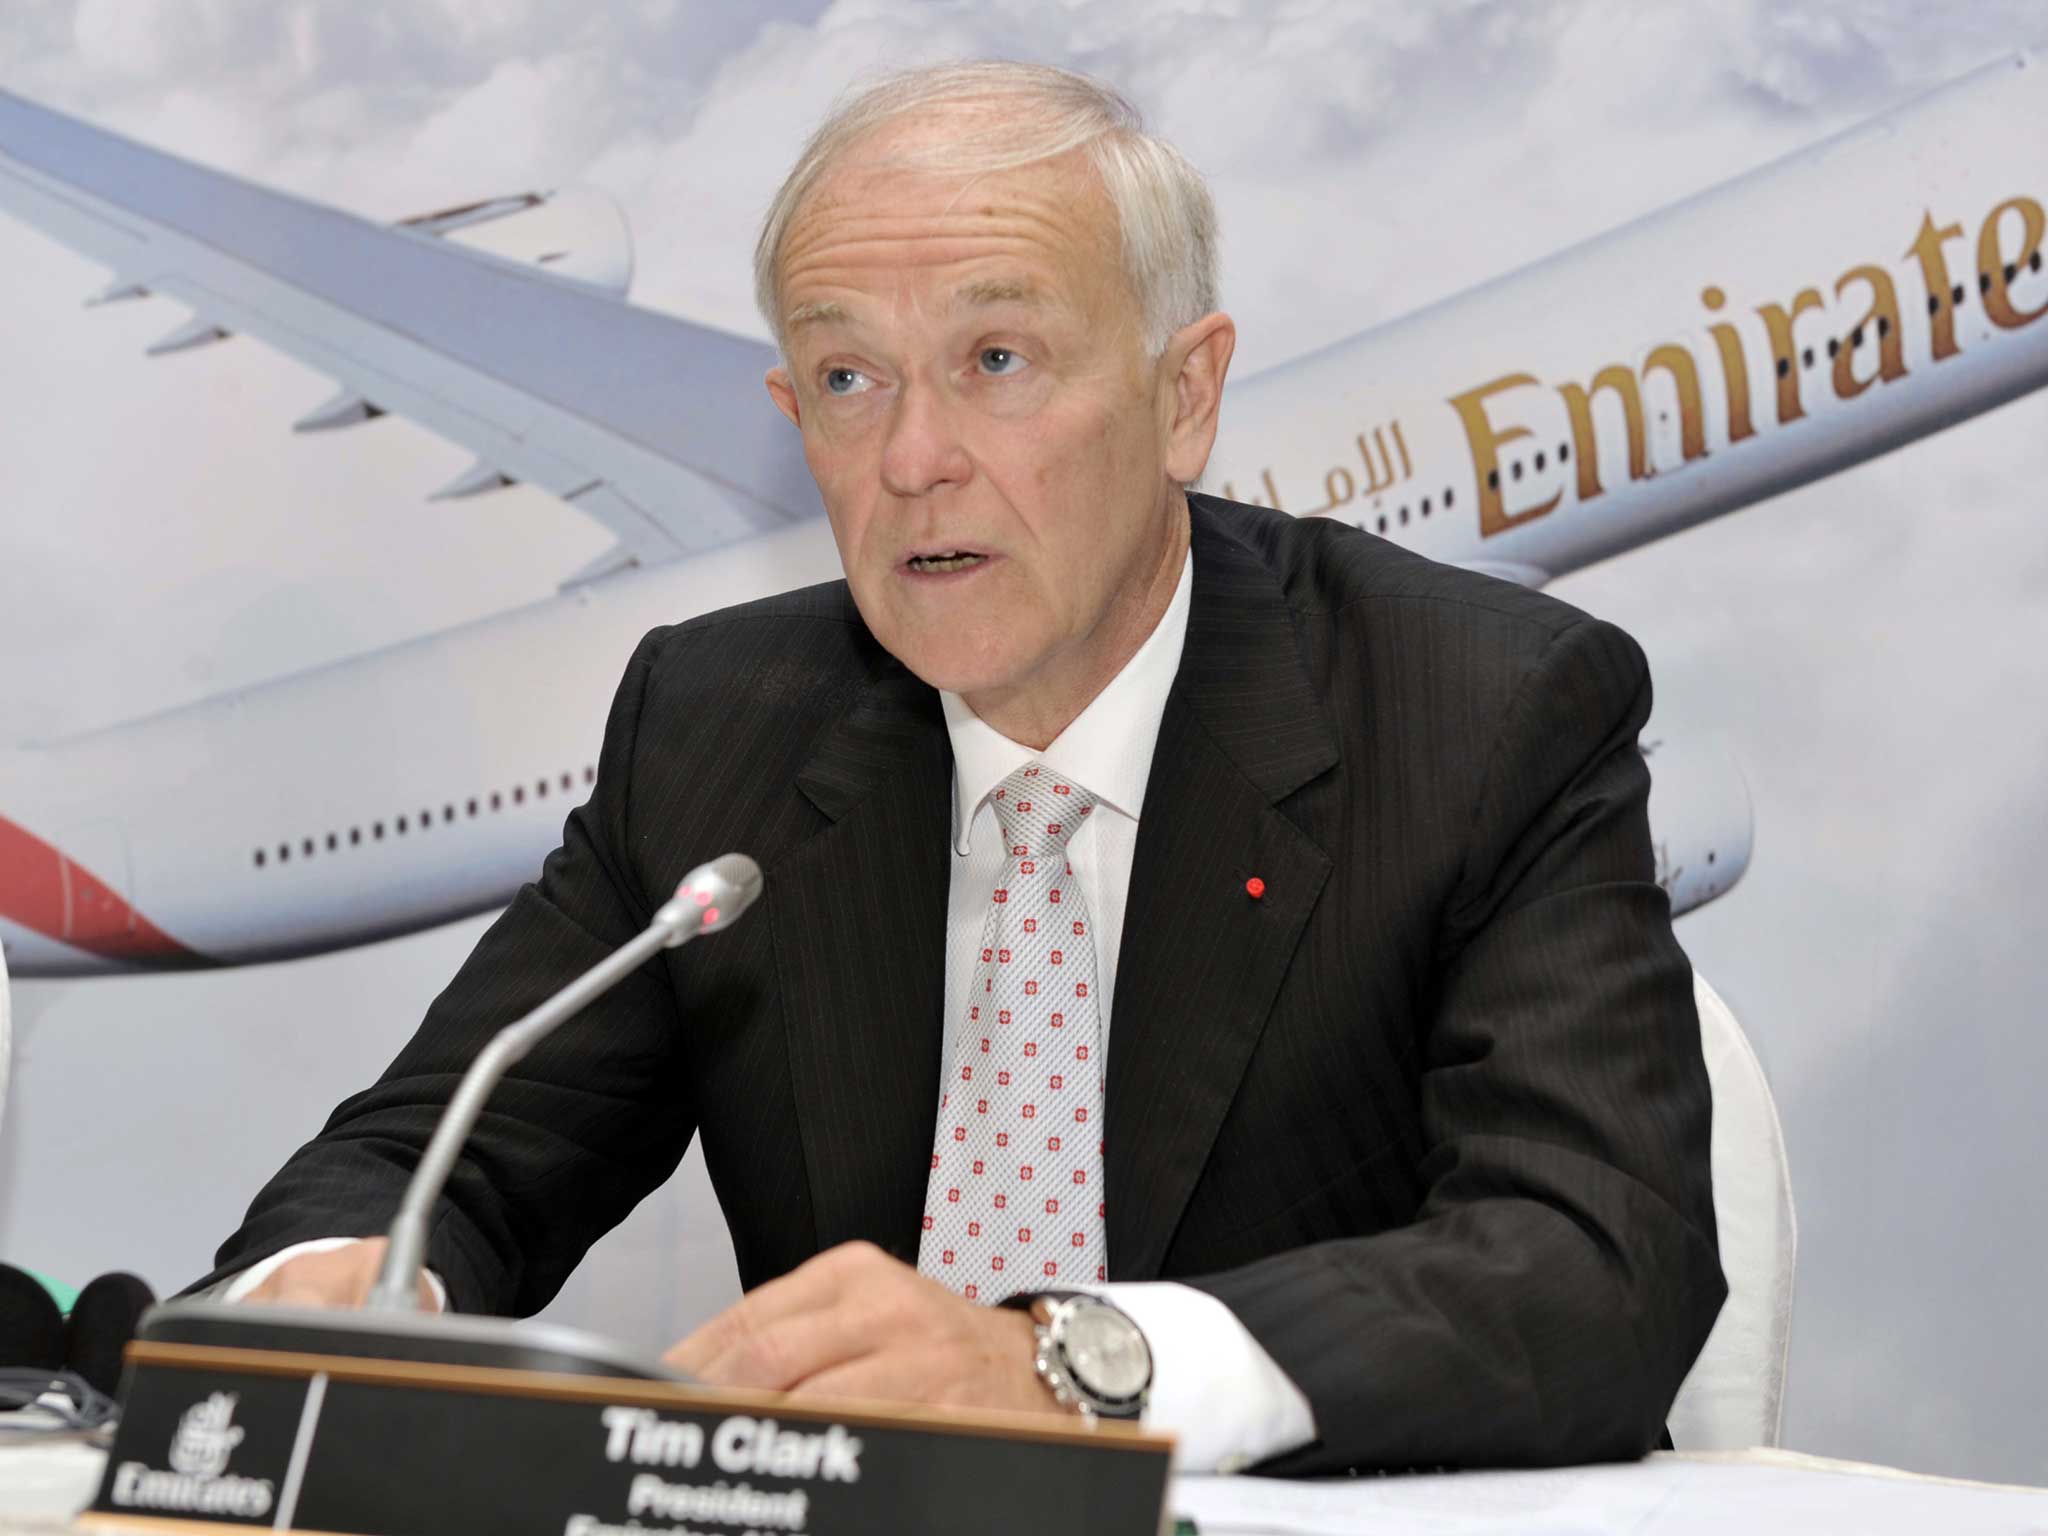 Emirates Airlines boss Sir Tim Clark